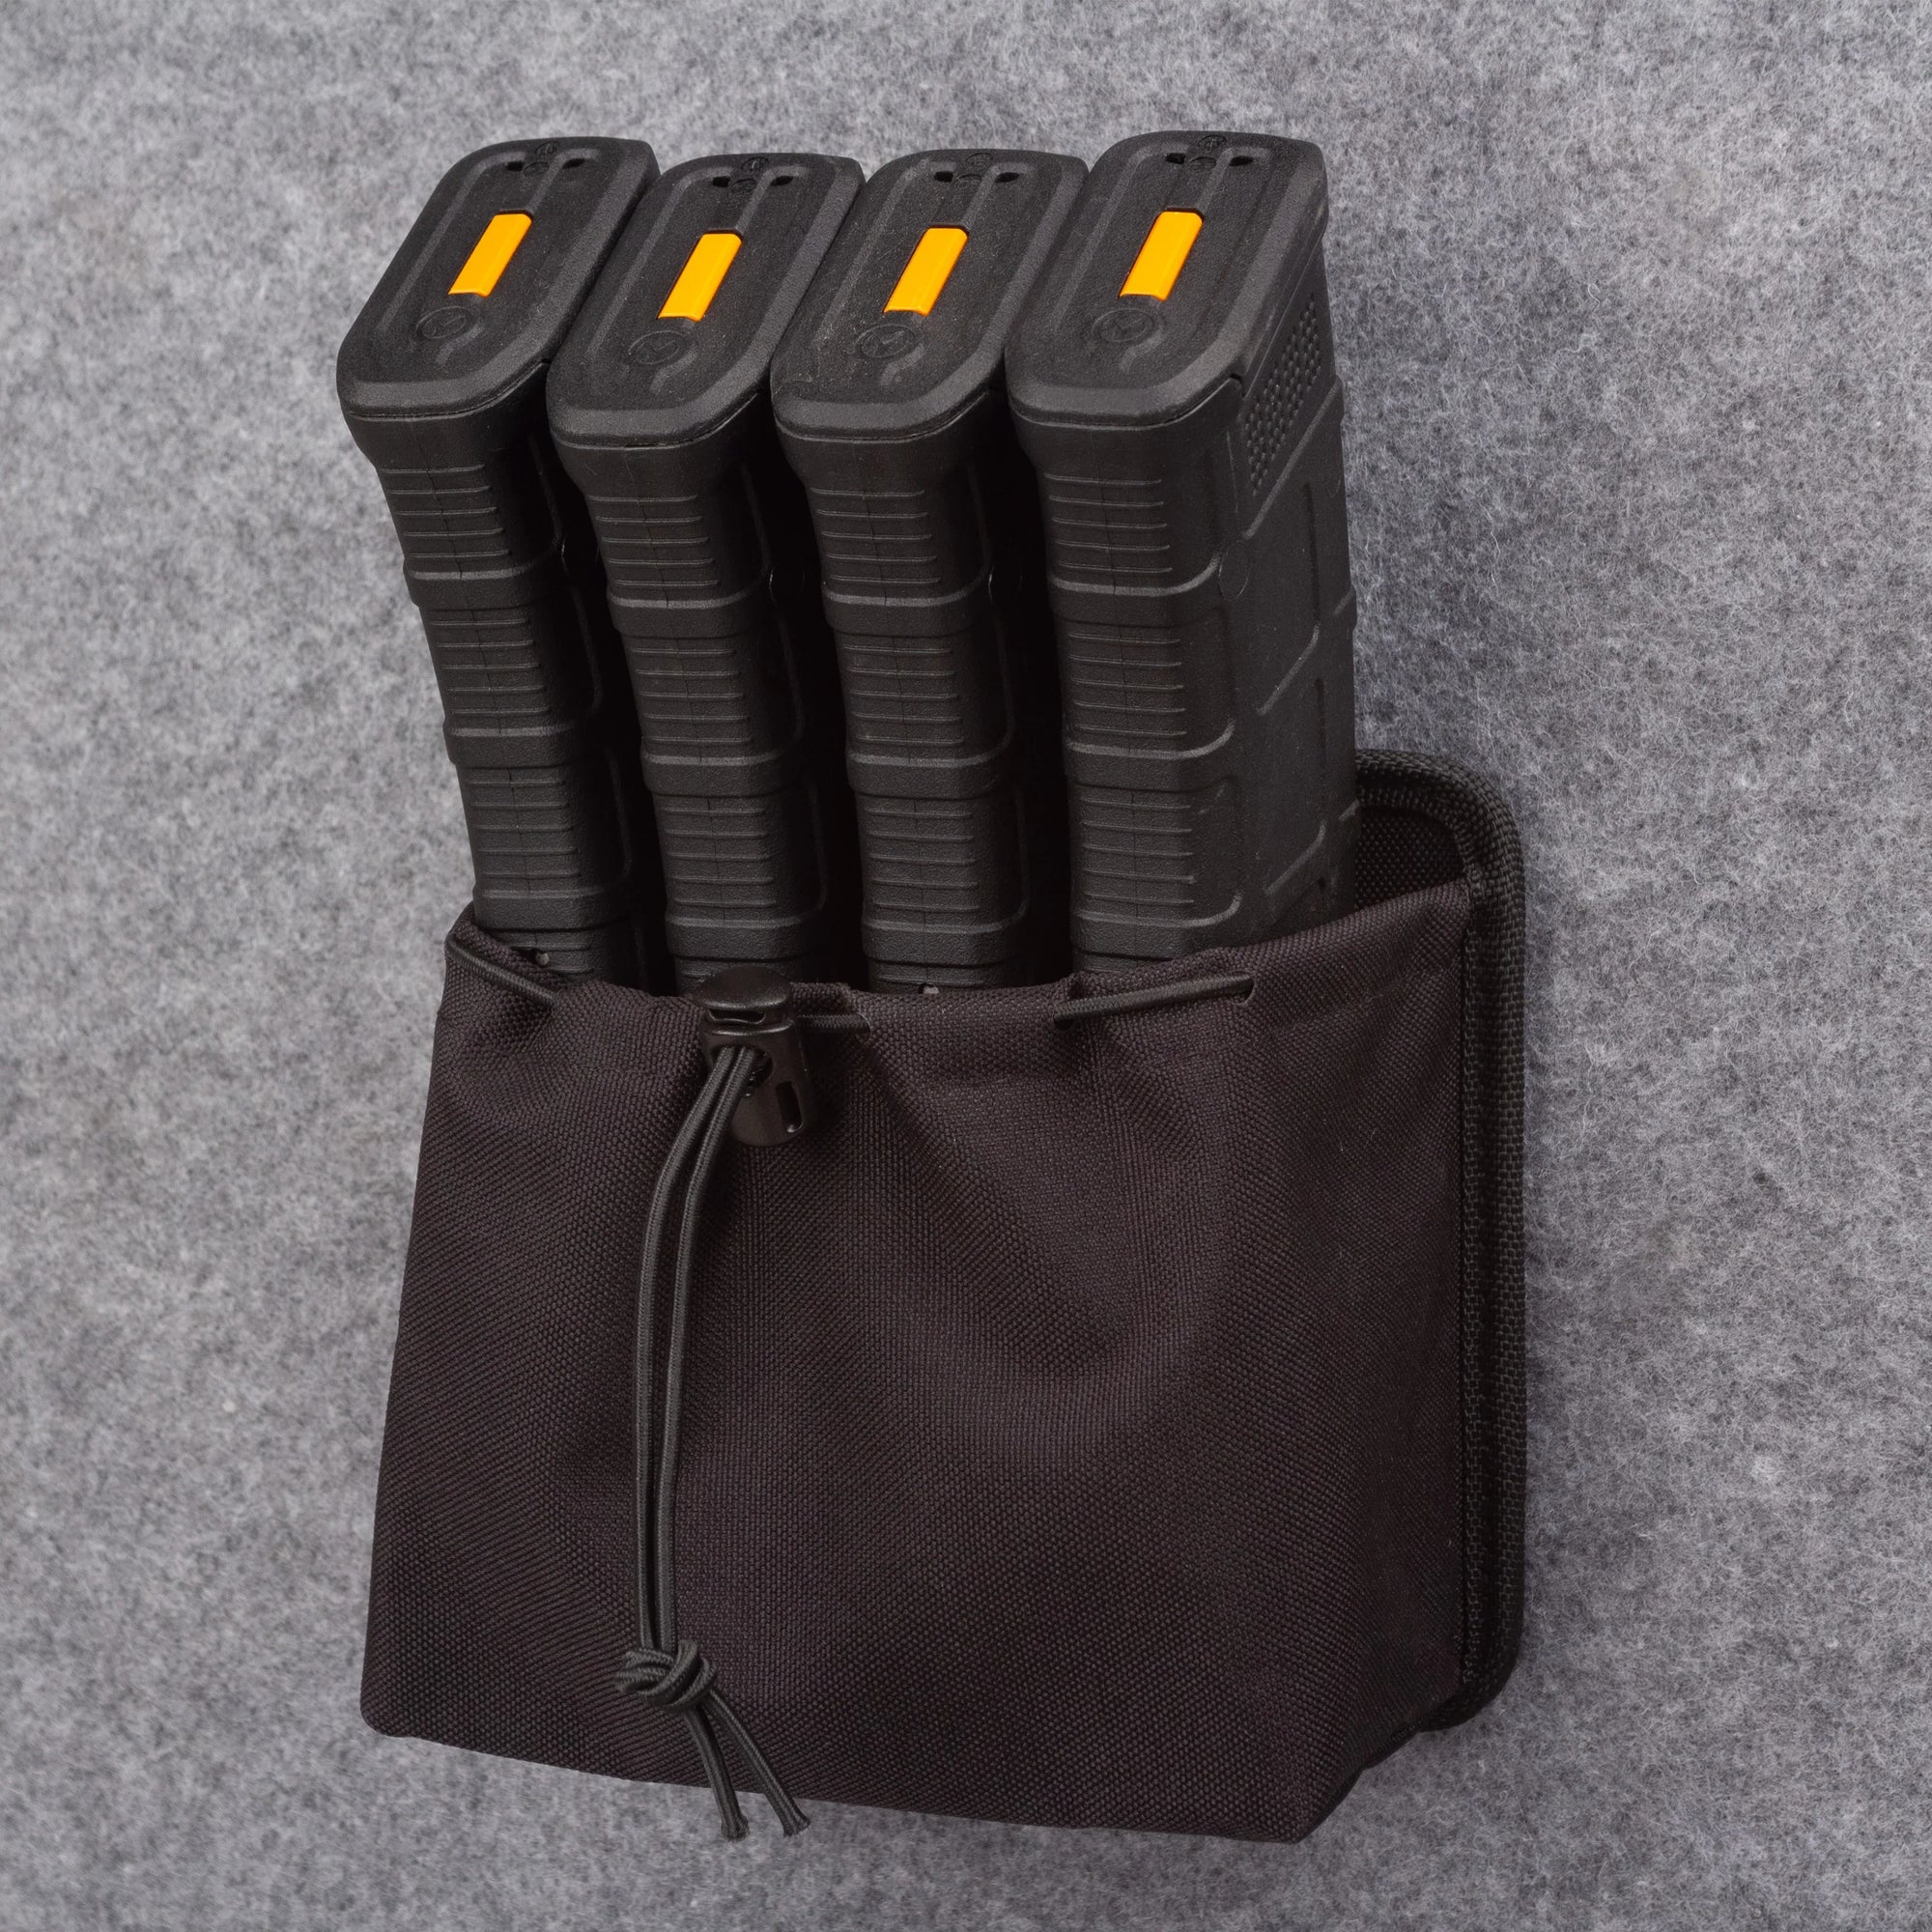 Tracker Safe - Pocket - 4 Pistol Mag Holder (PPM4) – Tracker Safe LLC